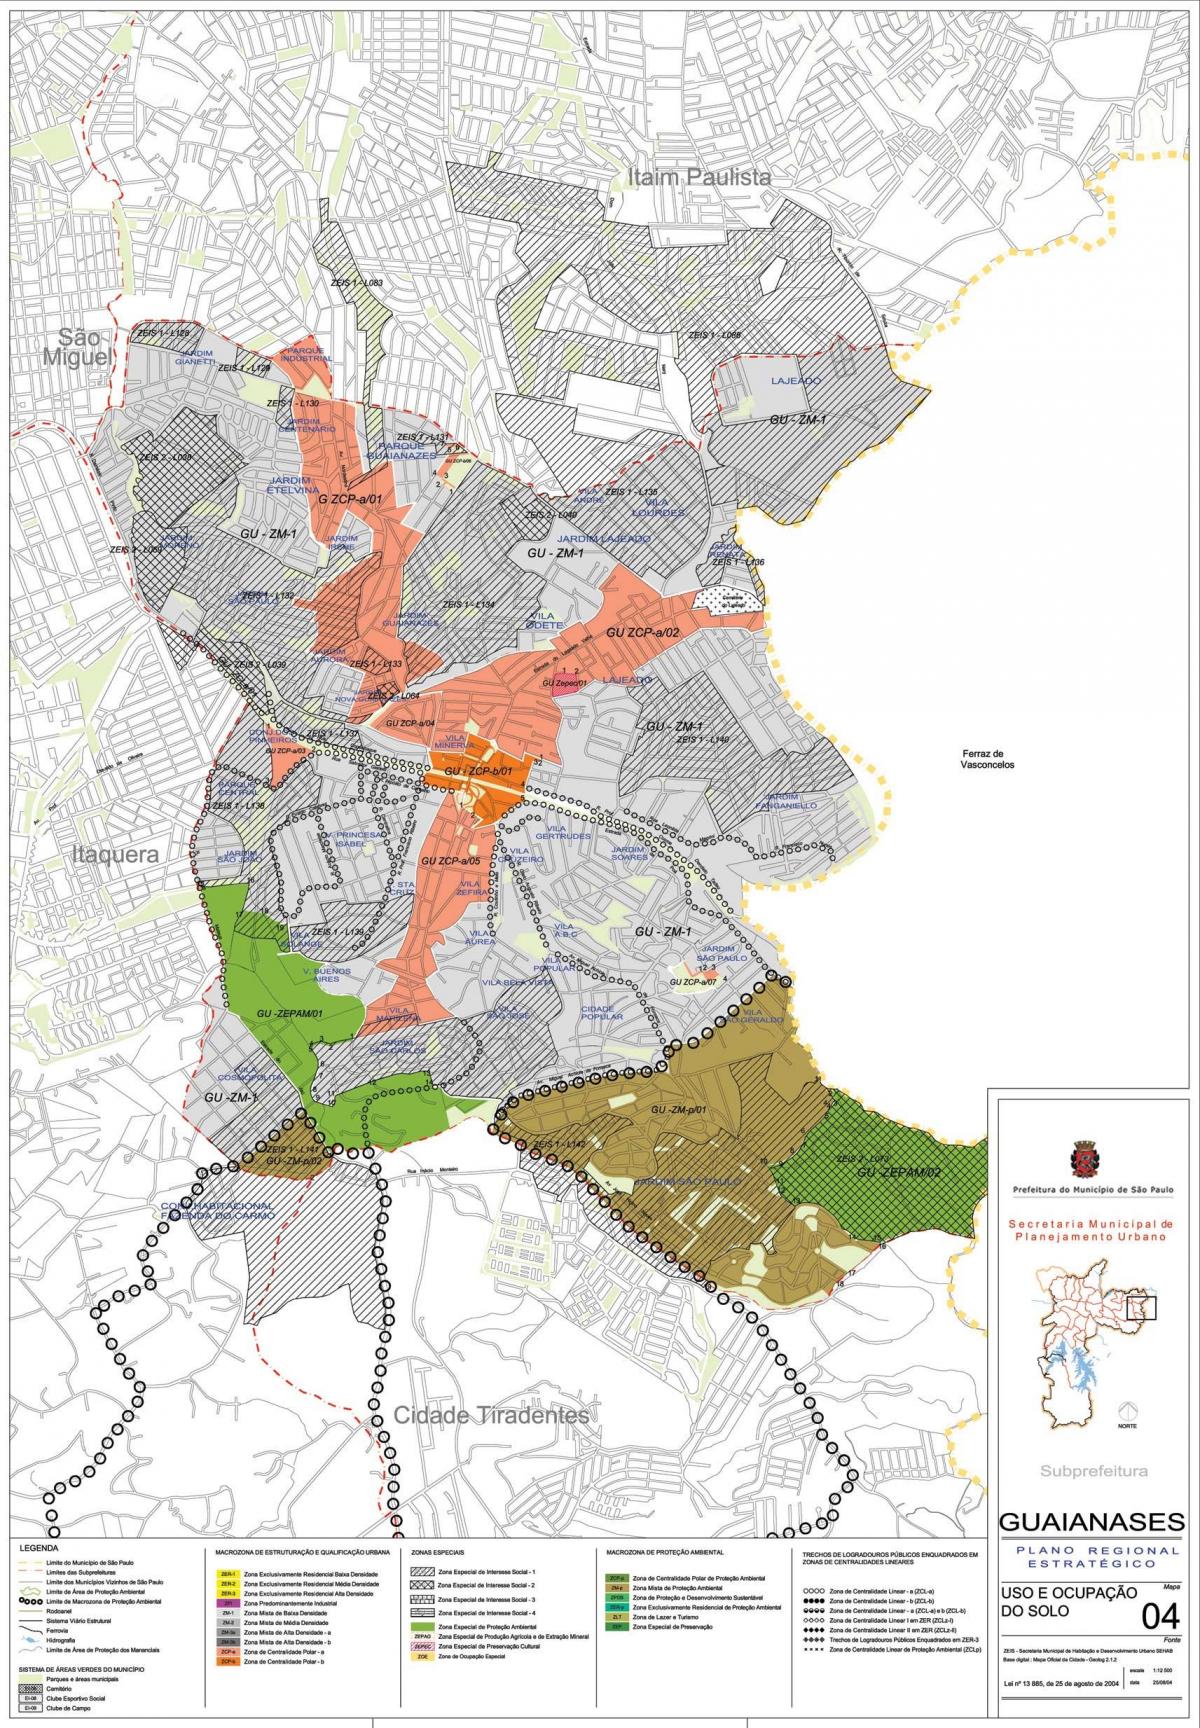 Mapa Guaianases São Paulo - lurzoruaren Okupazioa